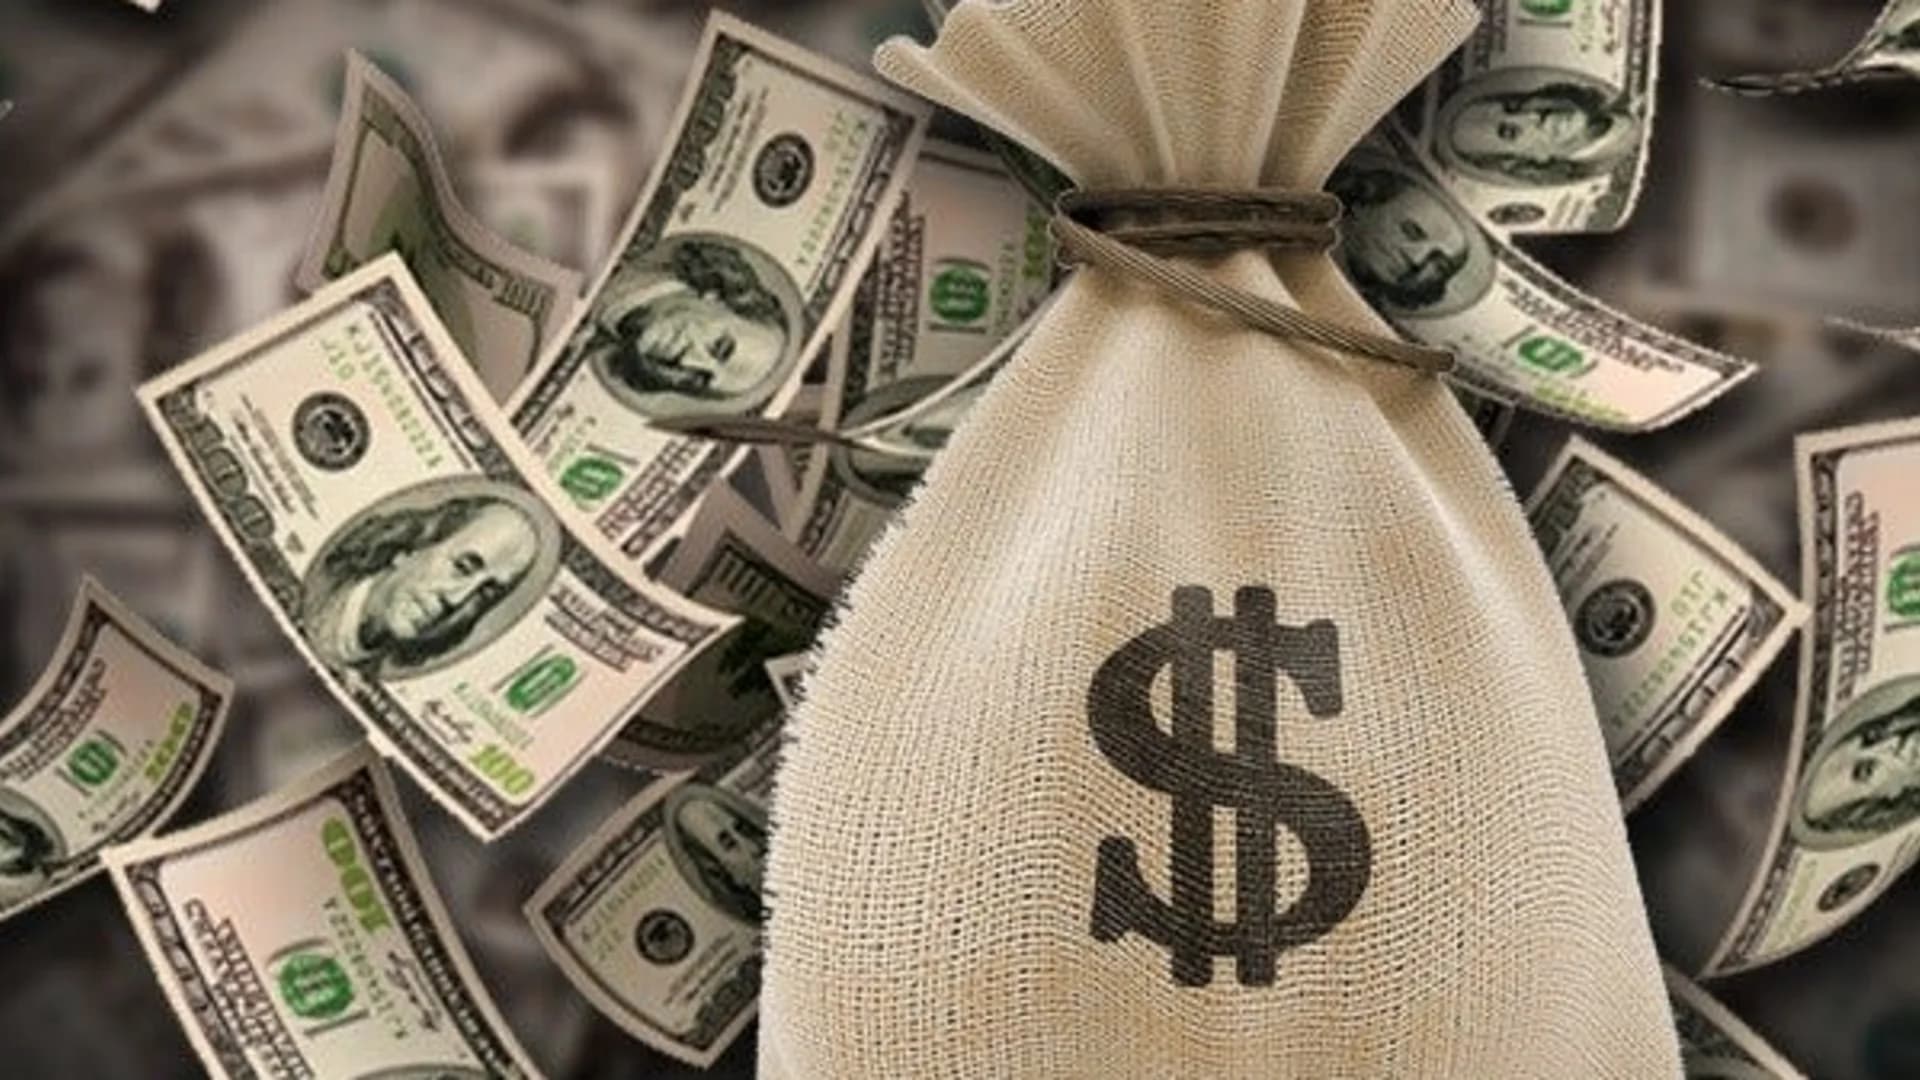 NJ man finds bag of $10,000 in cash on street, turns it in